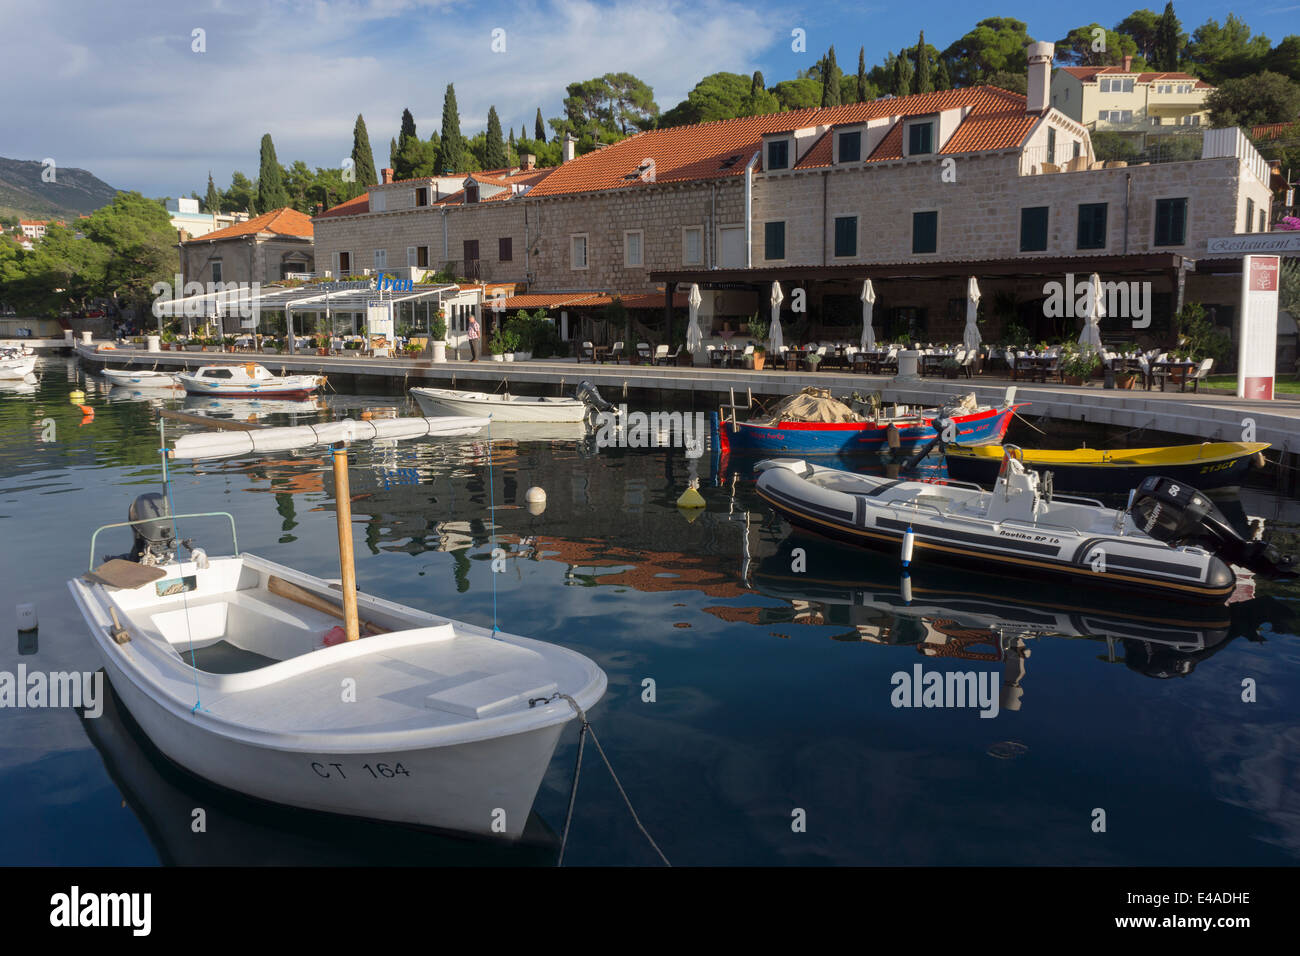 Croatia, Cavtat, Restaurants at harbor Stock Photo